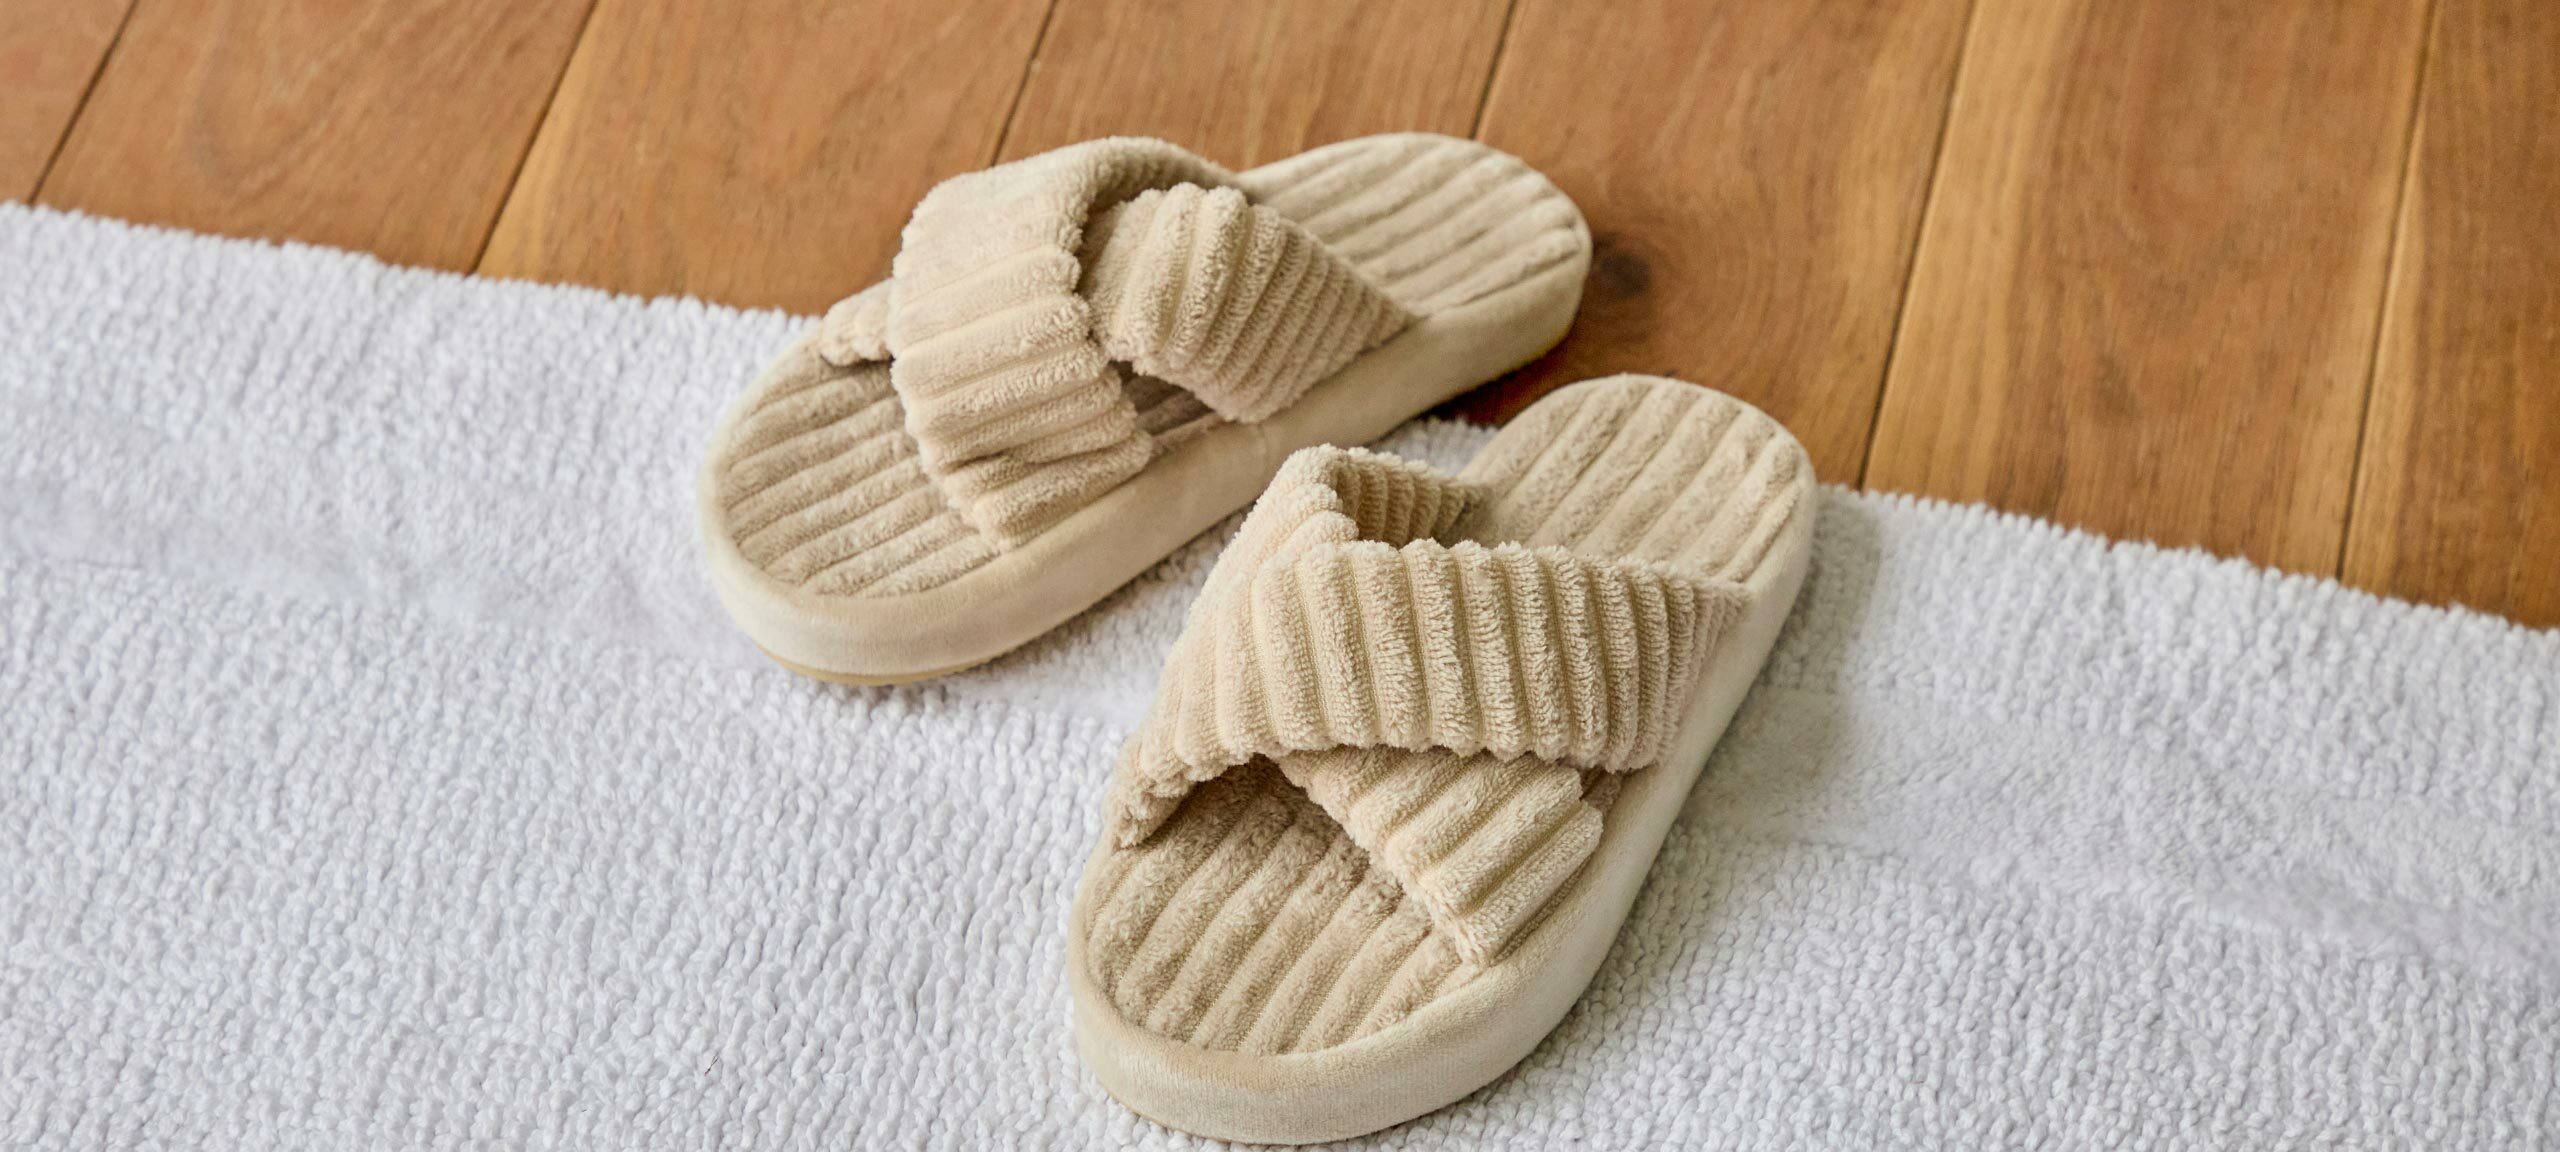 Plush neutral toned slippers sit atop a bath mat